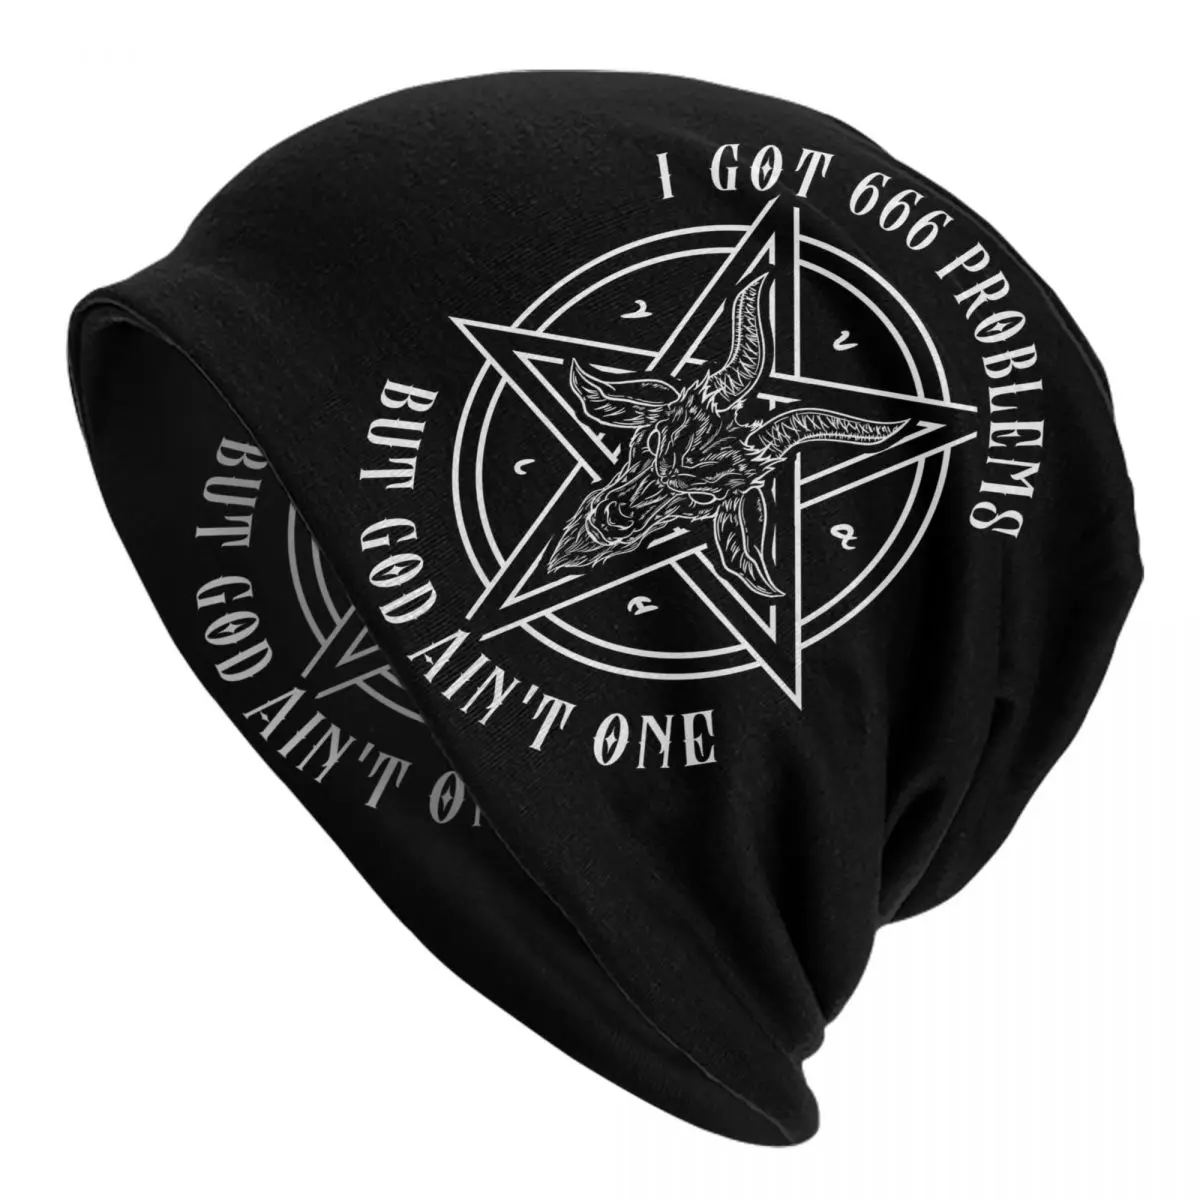 I Got 666 Problems I Satanic Goat I Baphomet Graphic Adult Men's Women's Knit Hat Keep warm winter Funny knitted hat